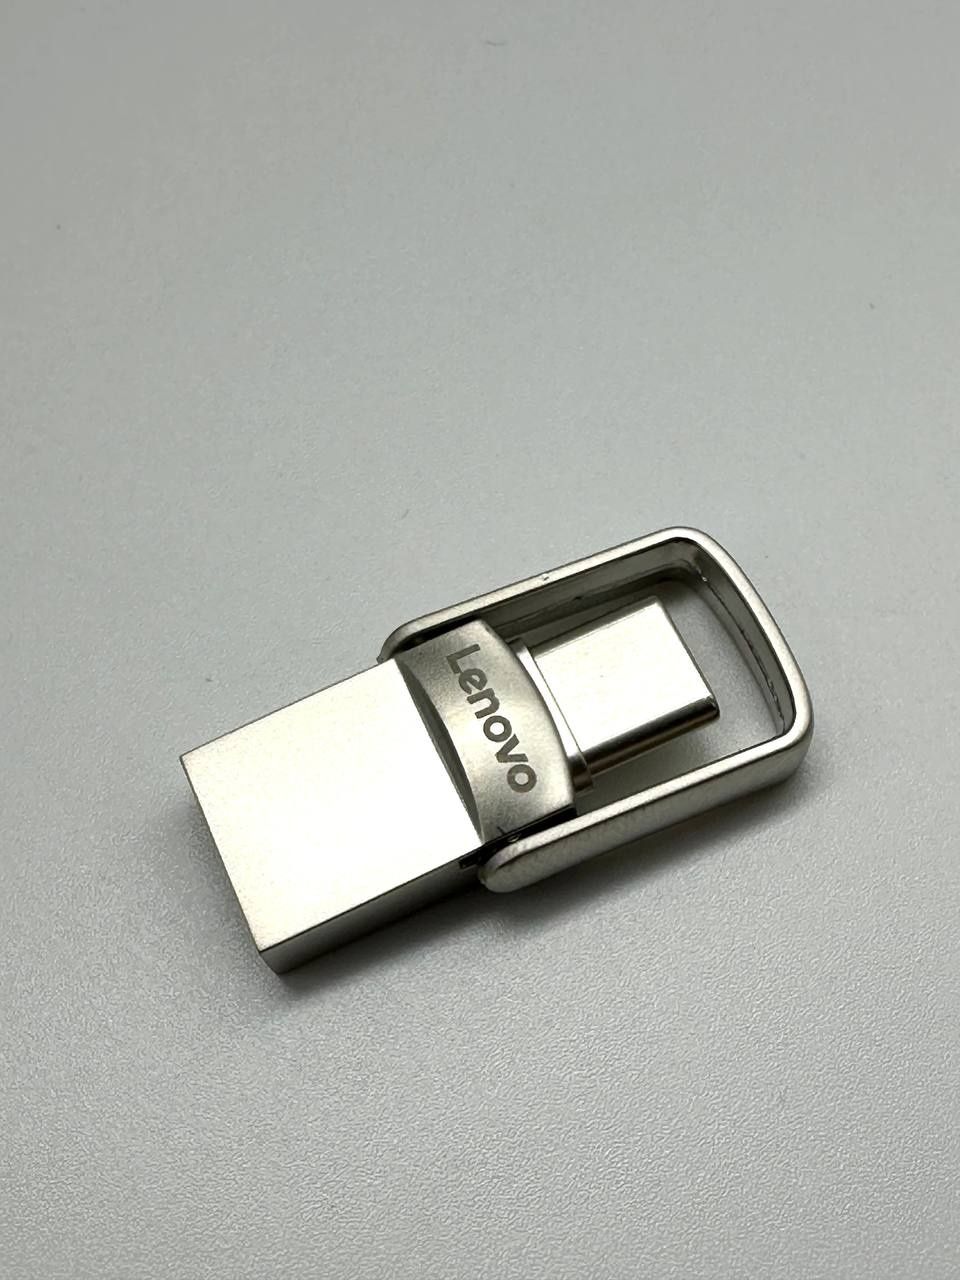 Флешка 2TB Type-C/USB Lenovo